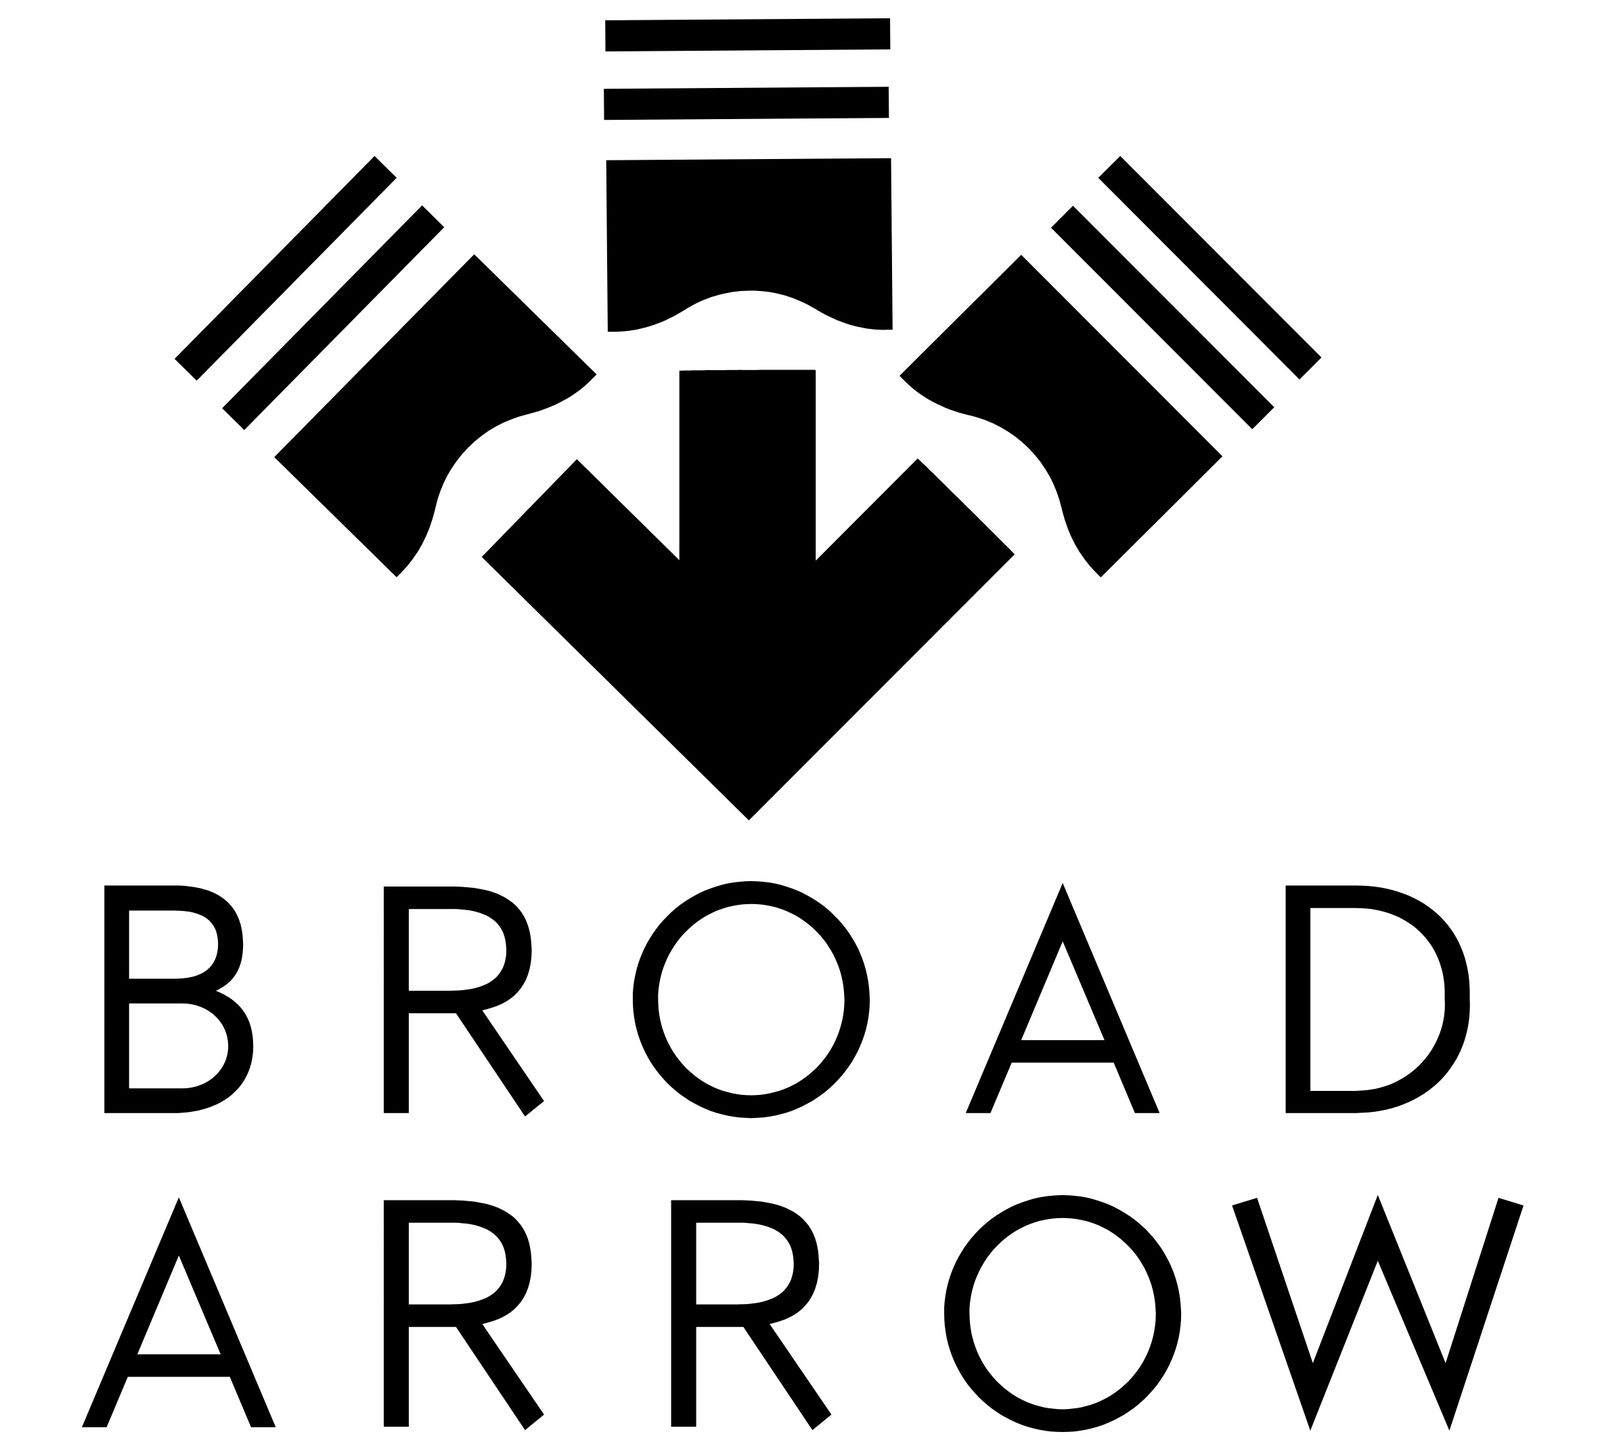 Broad Arrow 